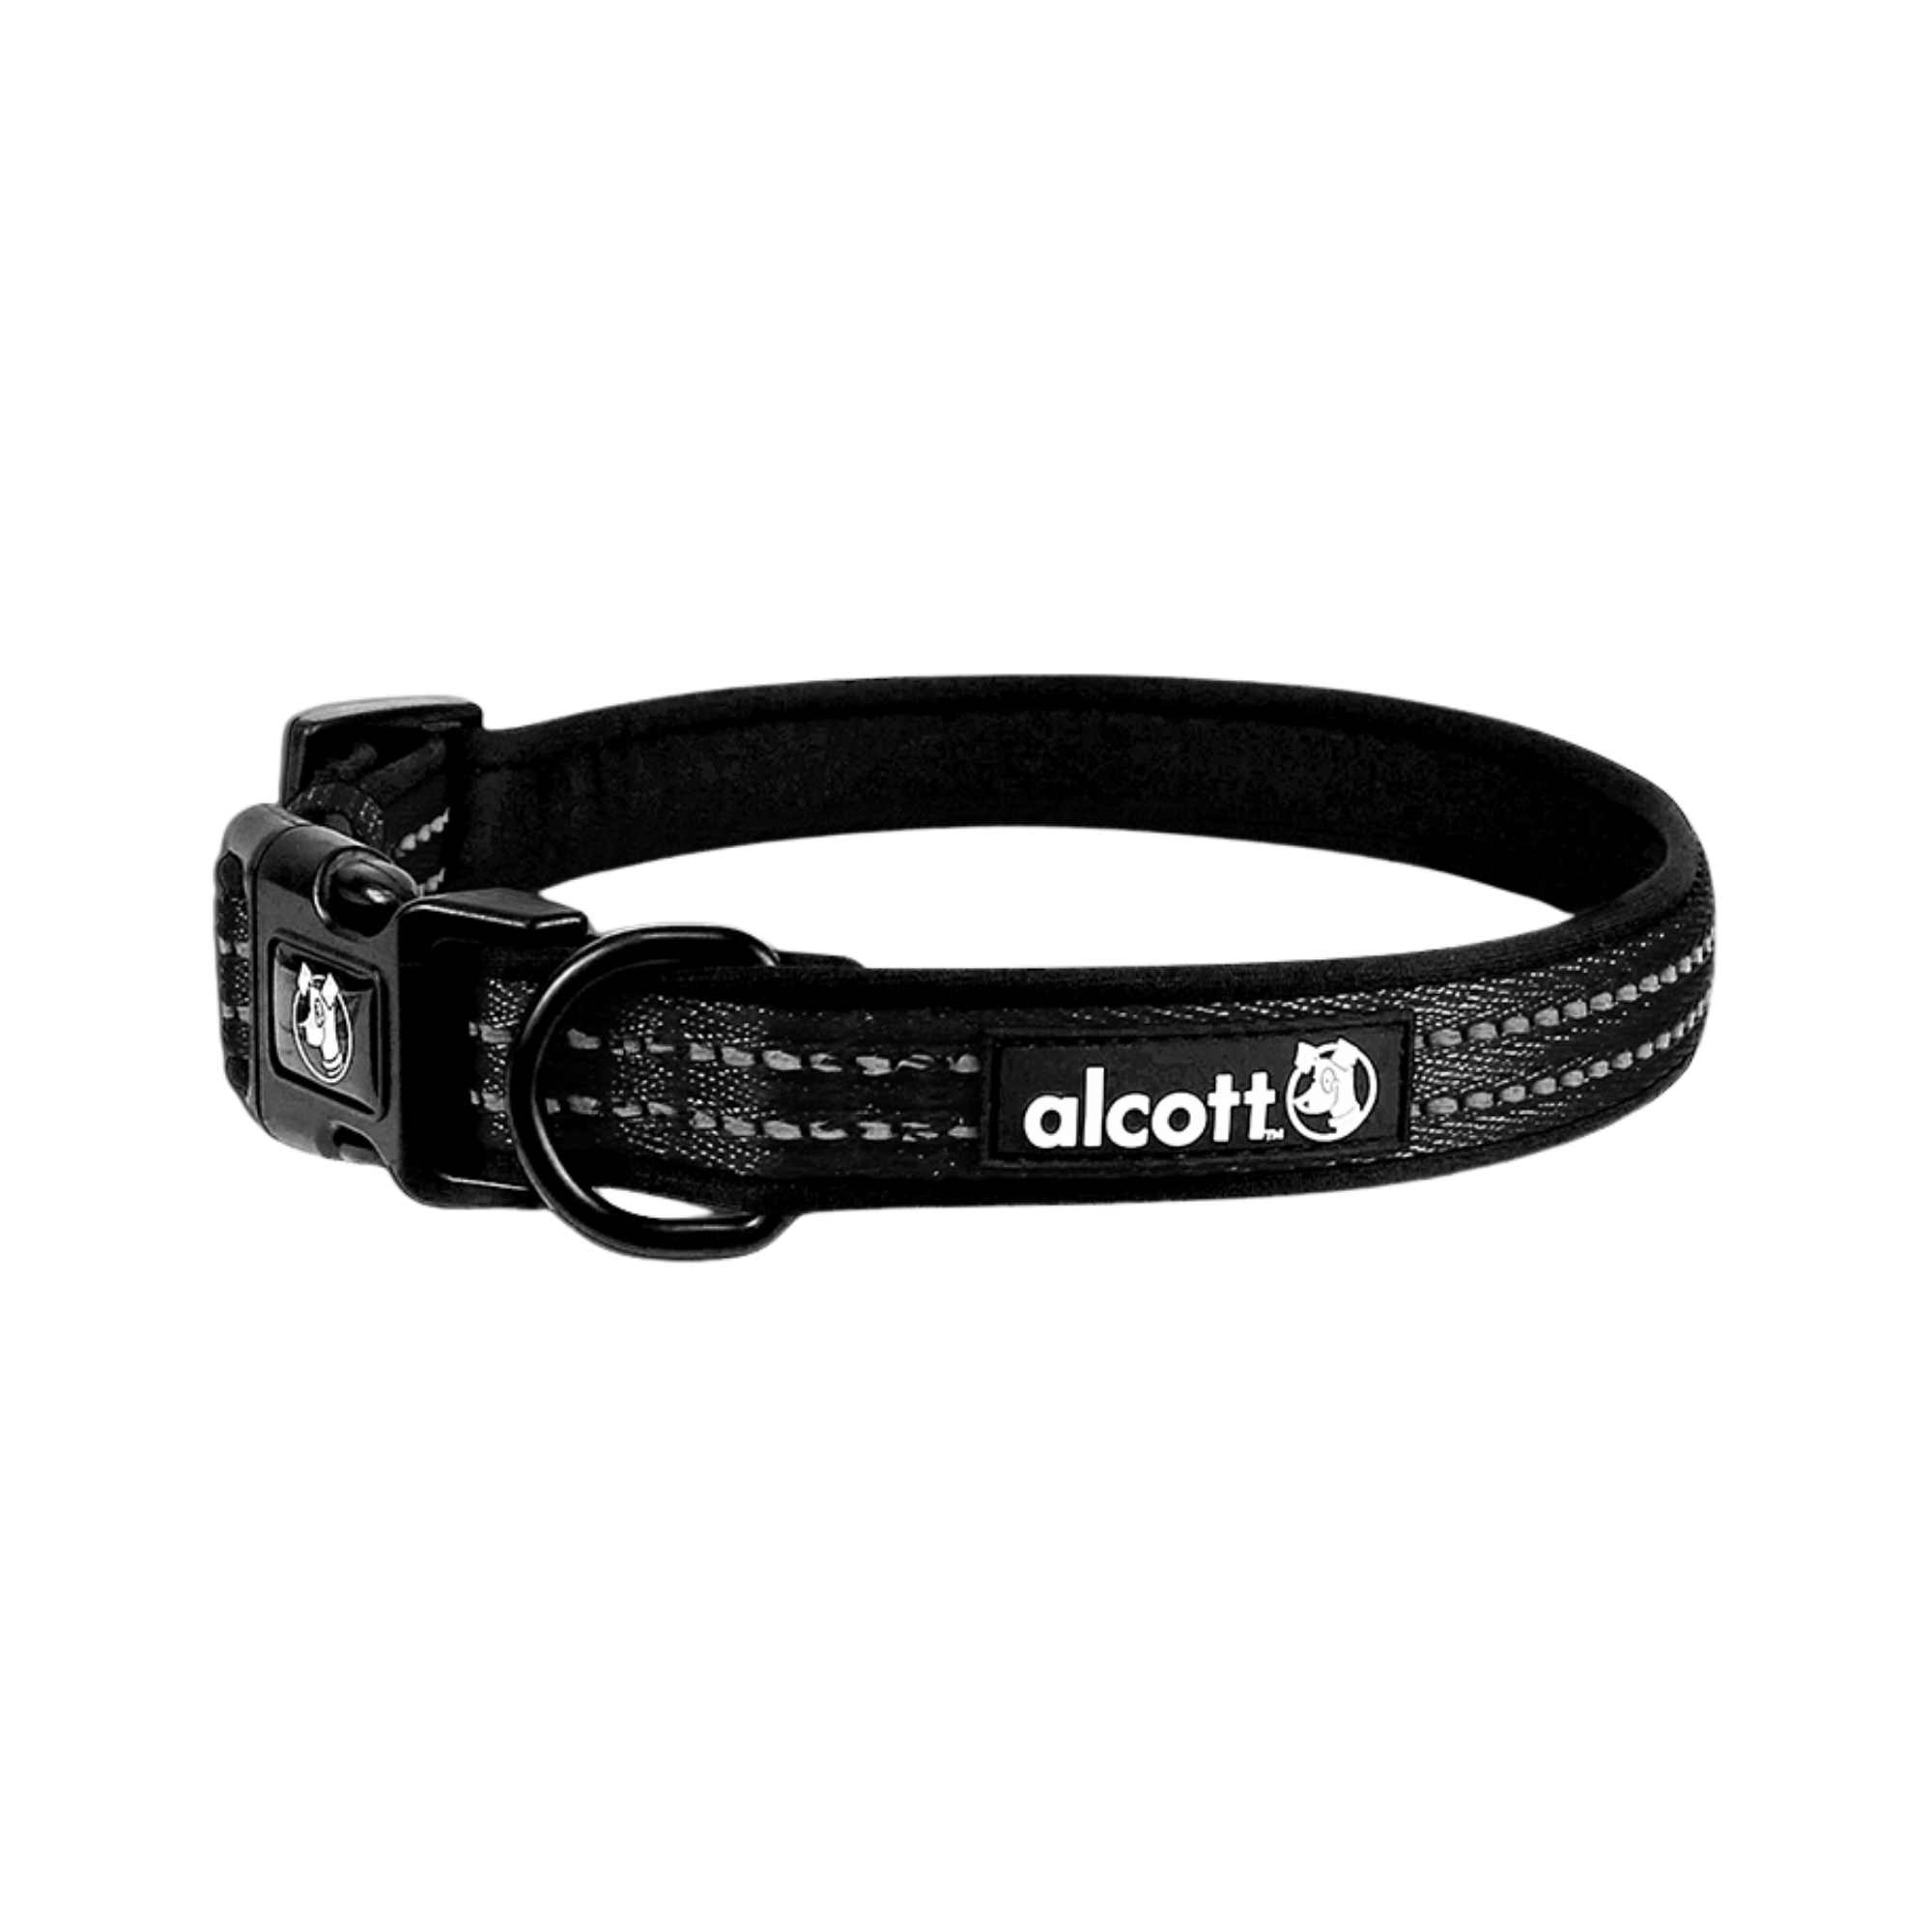 Alcott Adventure Collar Black - Mutts & Co.